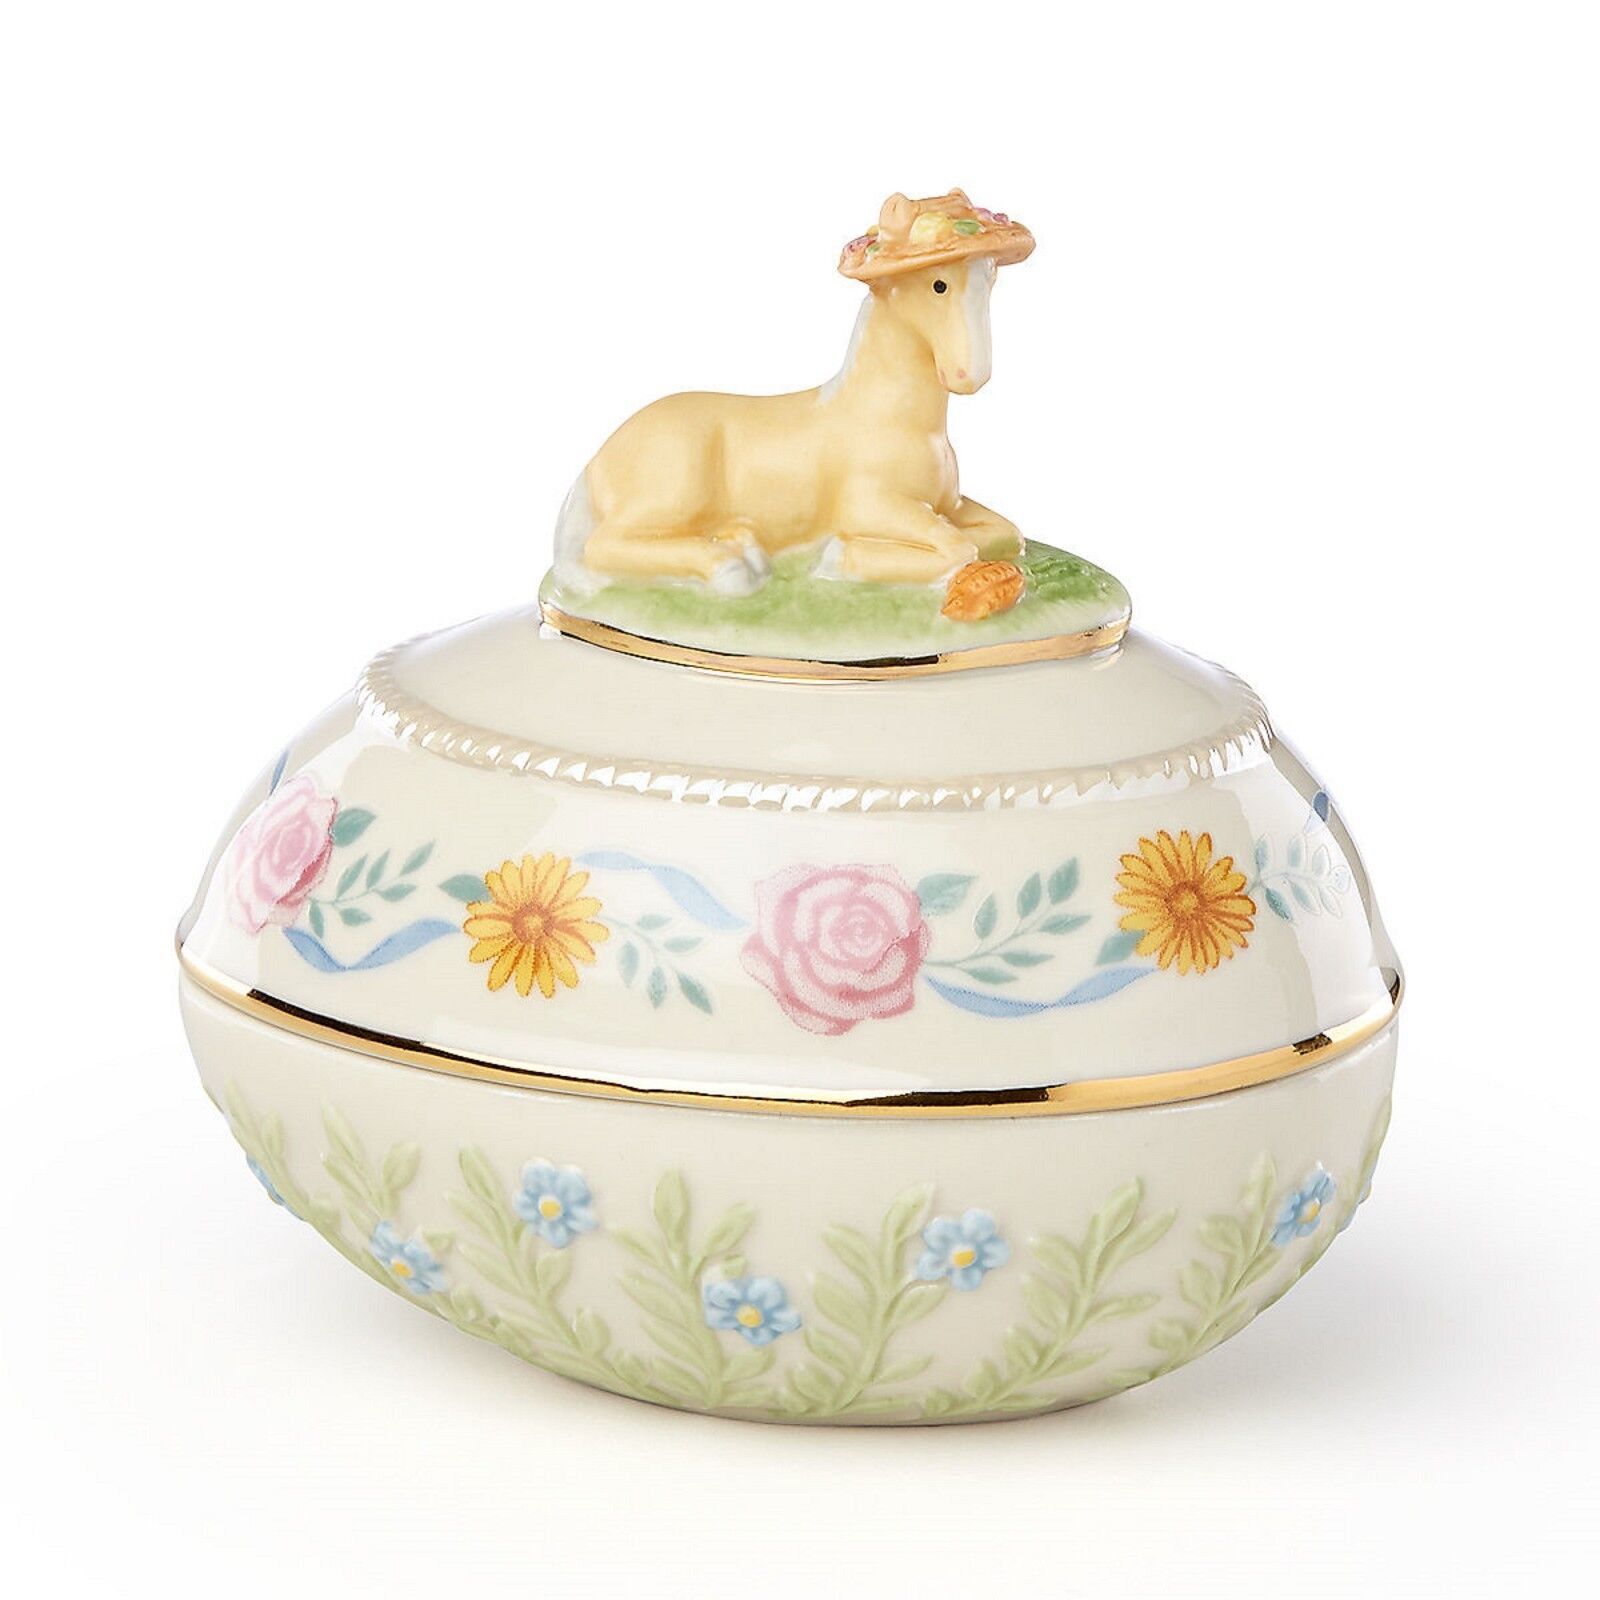 Primary image for Lenox Pony Easter Egg Trinket Box Figurine Springtime Horse Palomino 2018 NEW